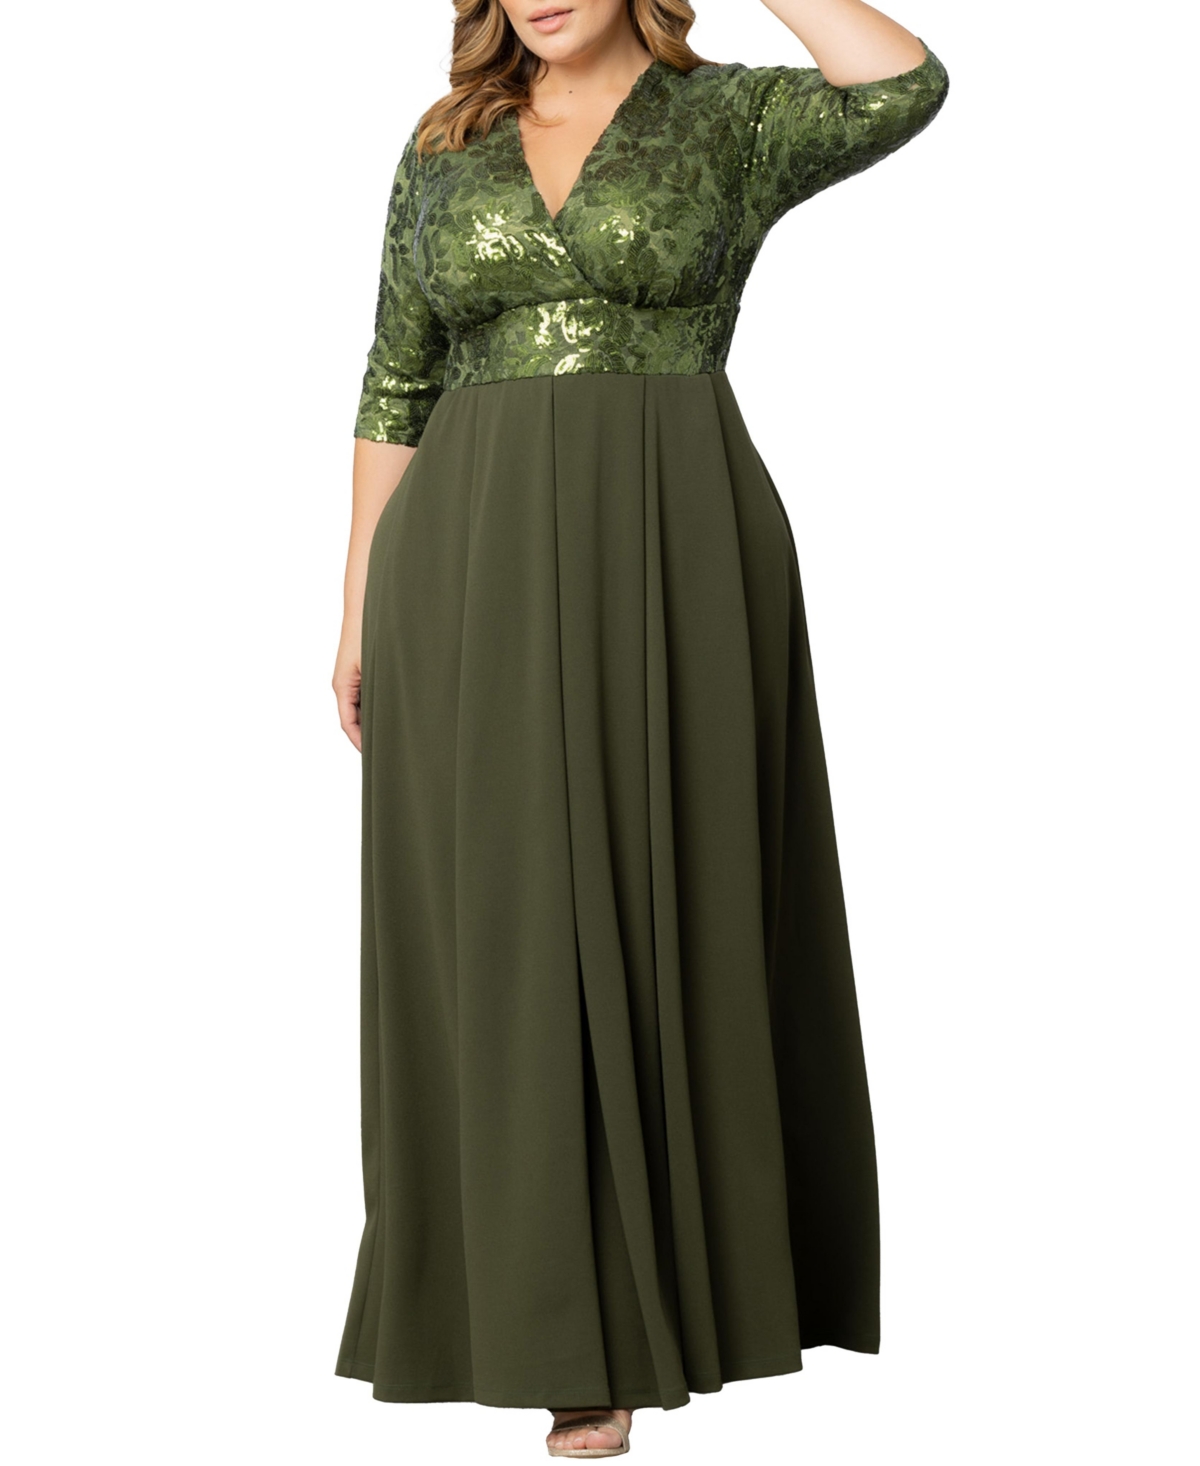 Women's Plus Size Paris Pleated Sequin Gown - Olive green